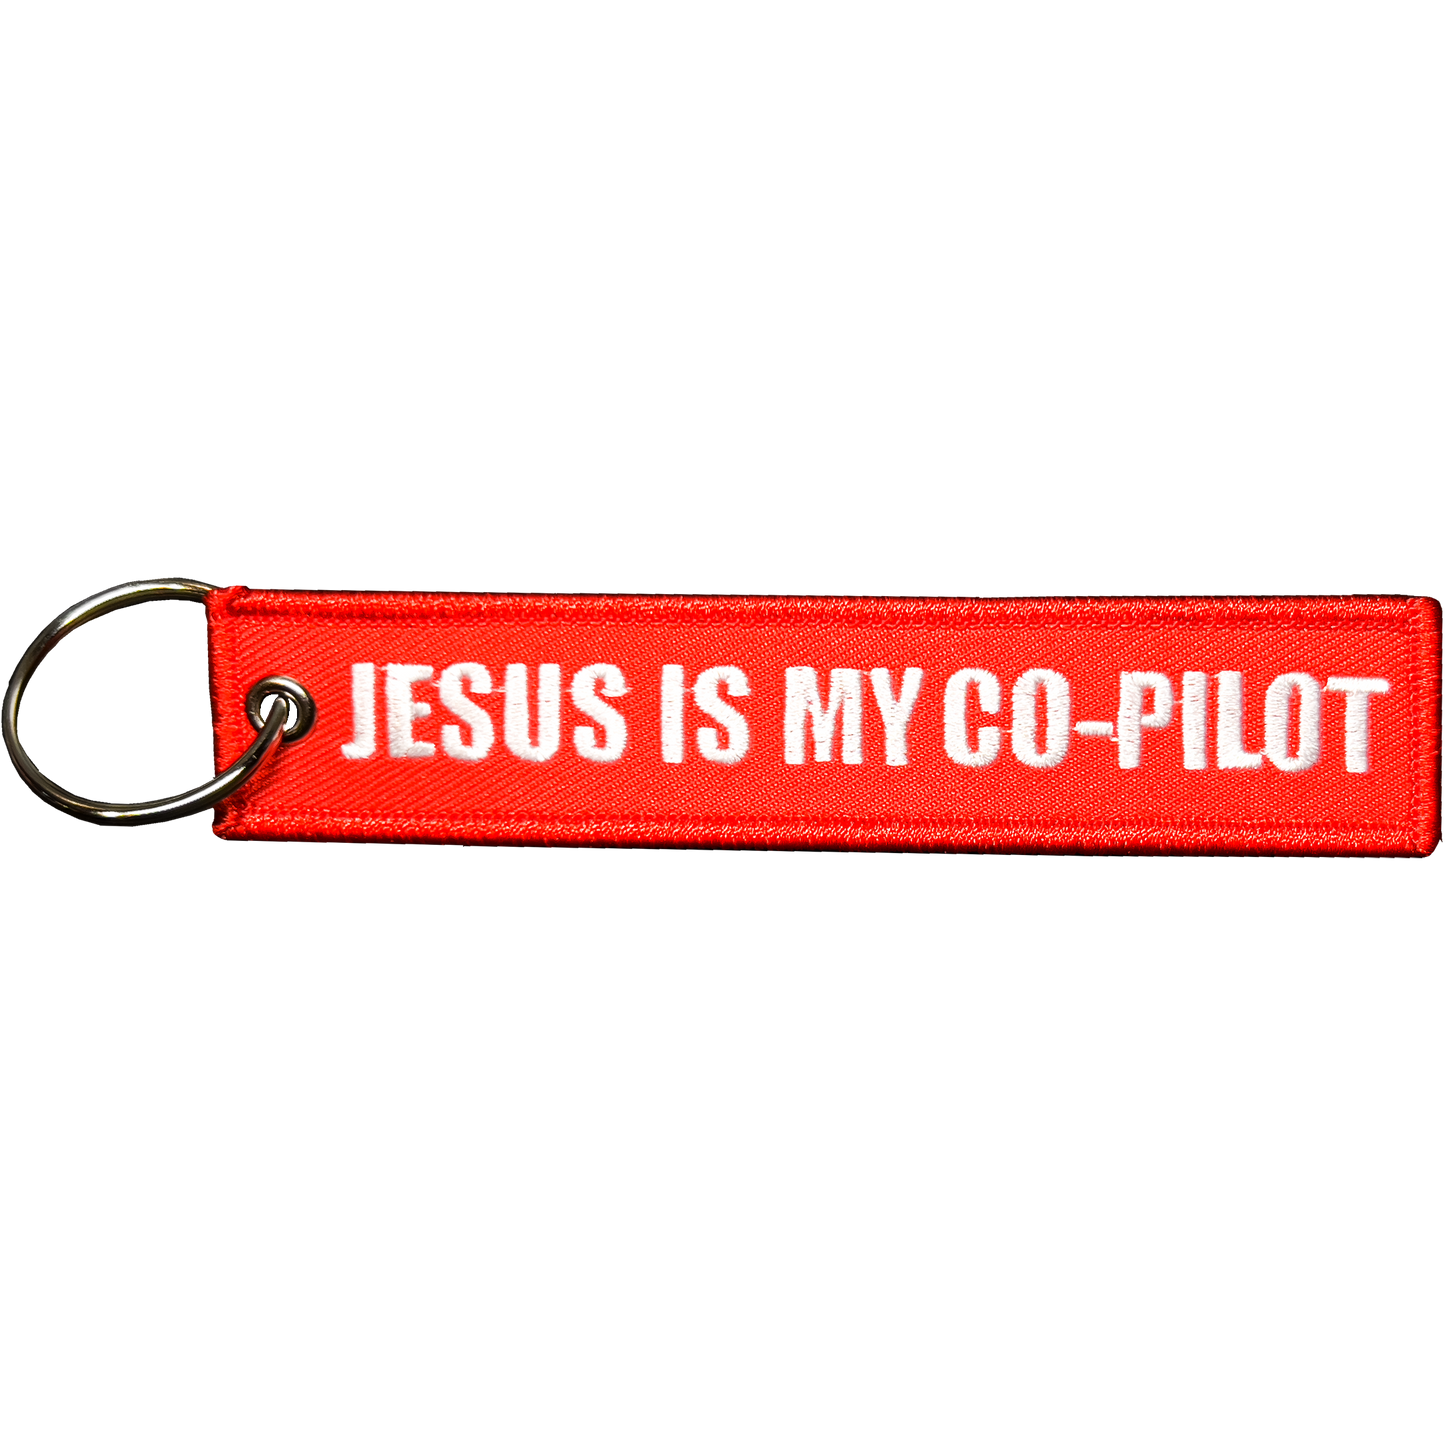 EL11-021 Jesus is my Co-Pilot Amen CREW Keychain or Luggage Tag or zipper pull Fish Spirit